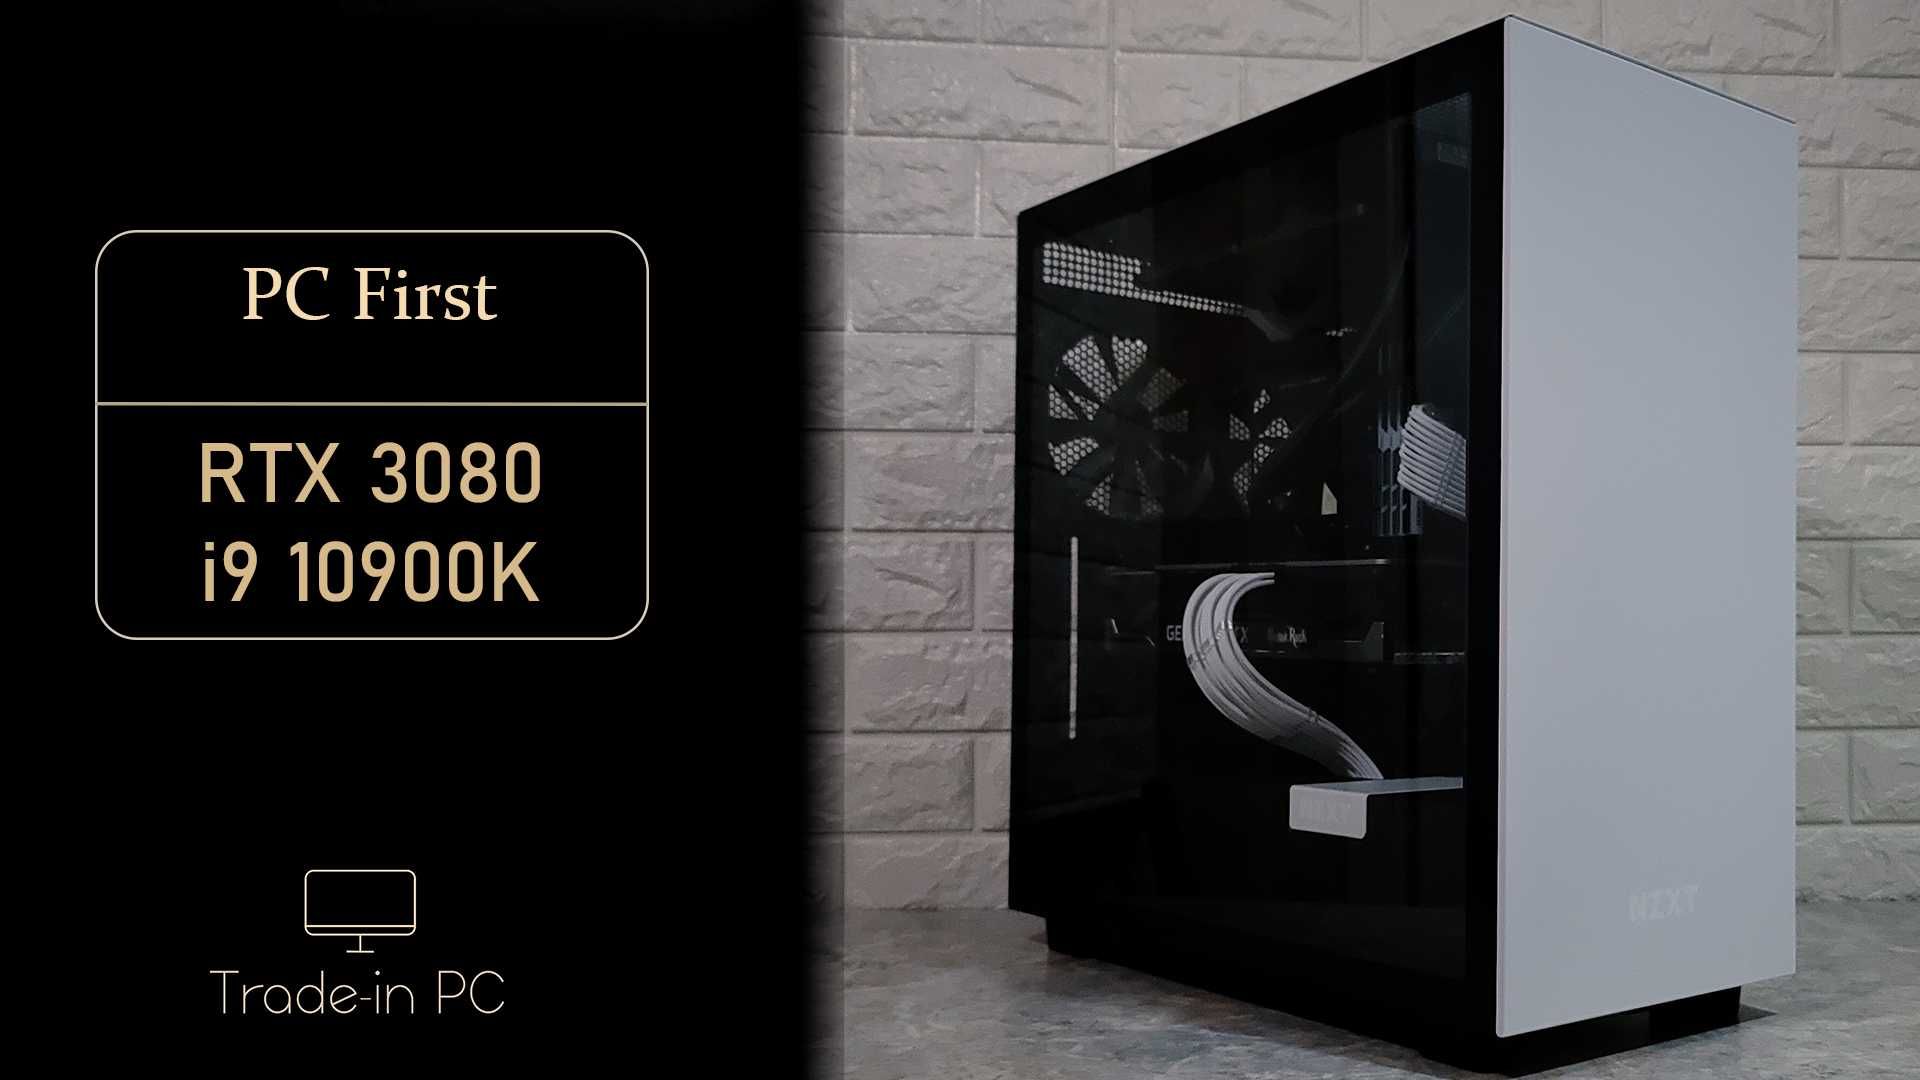 PC First i9 10900K RTX 3080